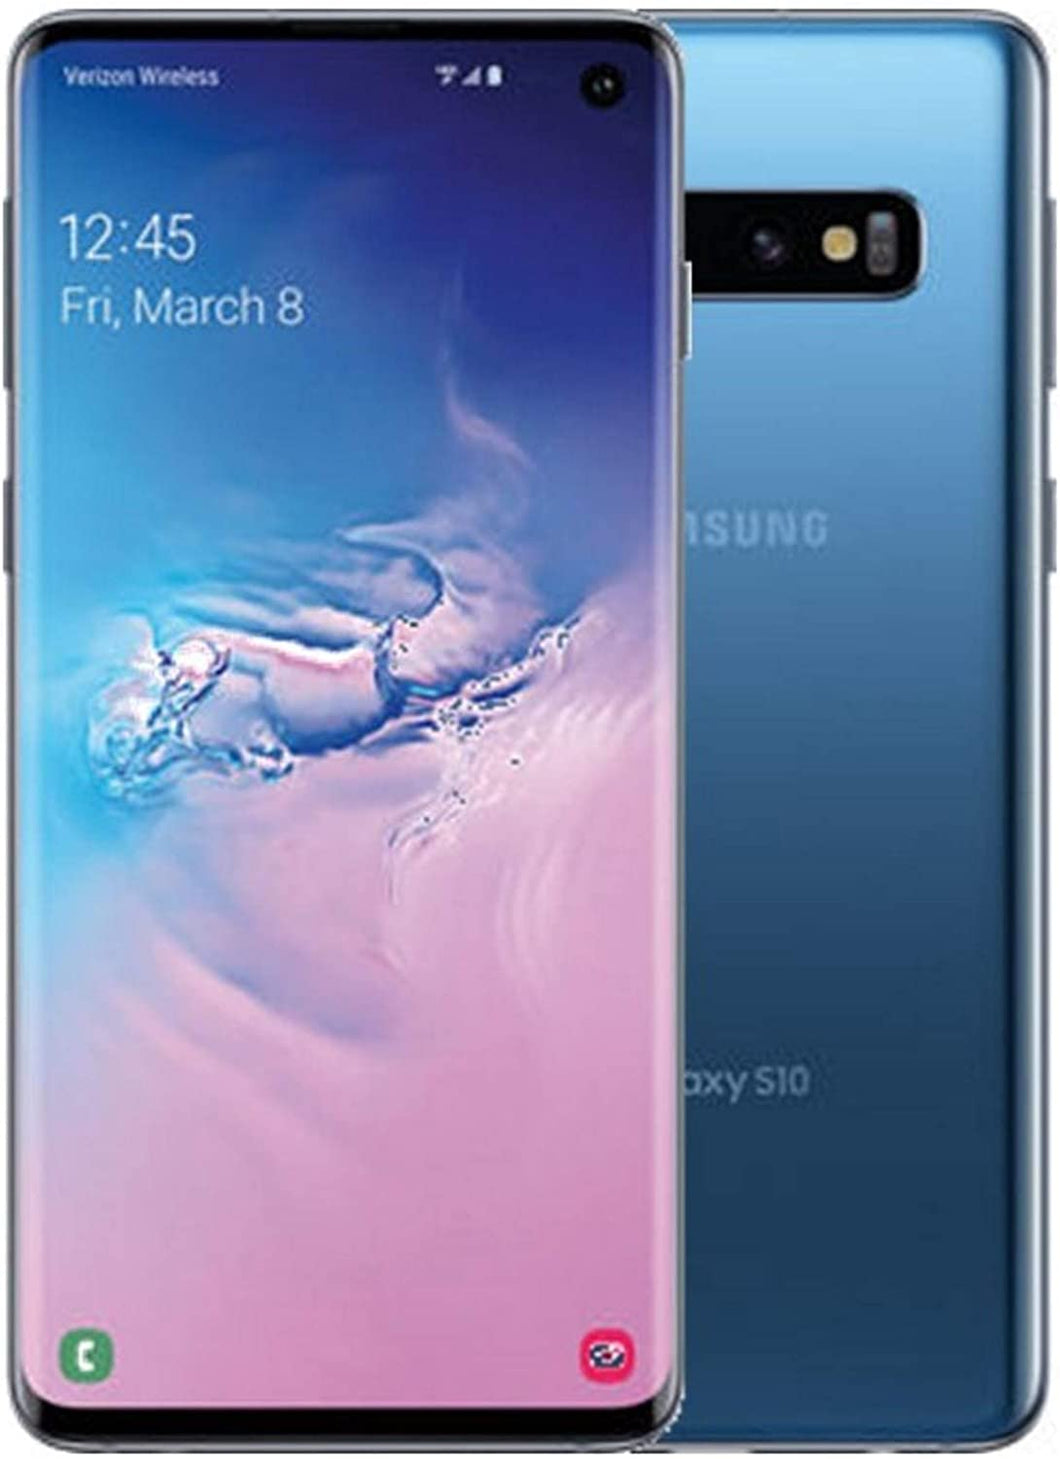 Galaxy S10 512GB - Prism Blue - Fully unlocked (GSM & CDMA)